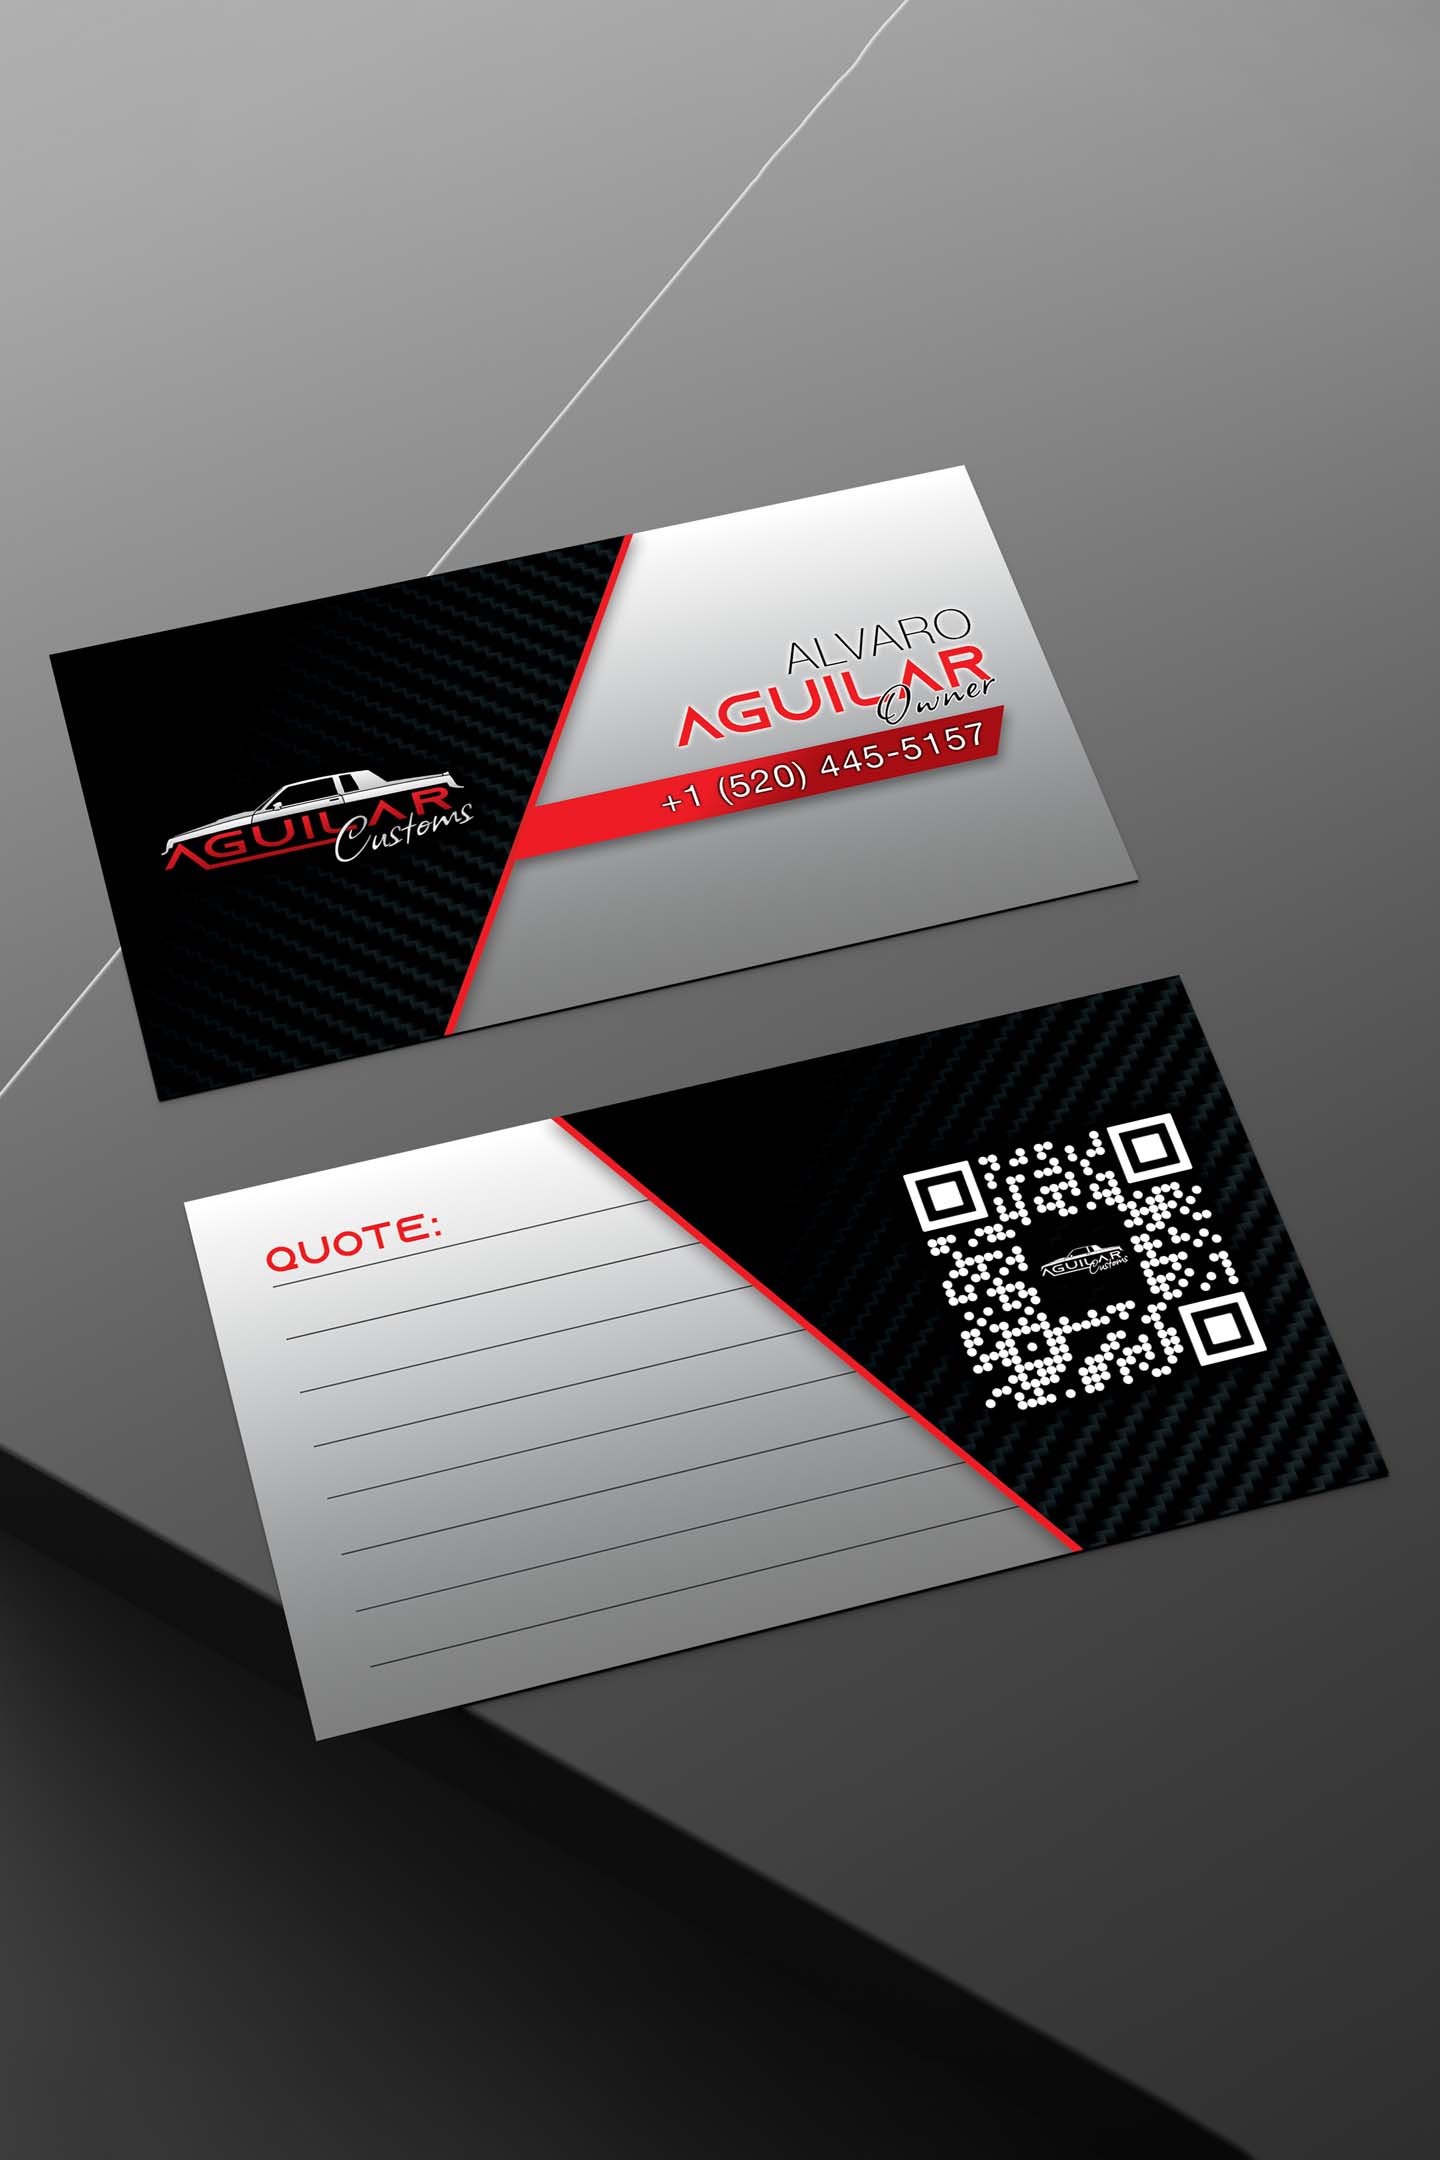 Aguilar Customs - Business Cards